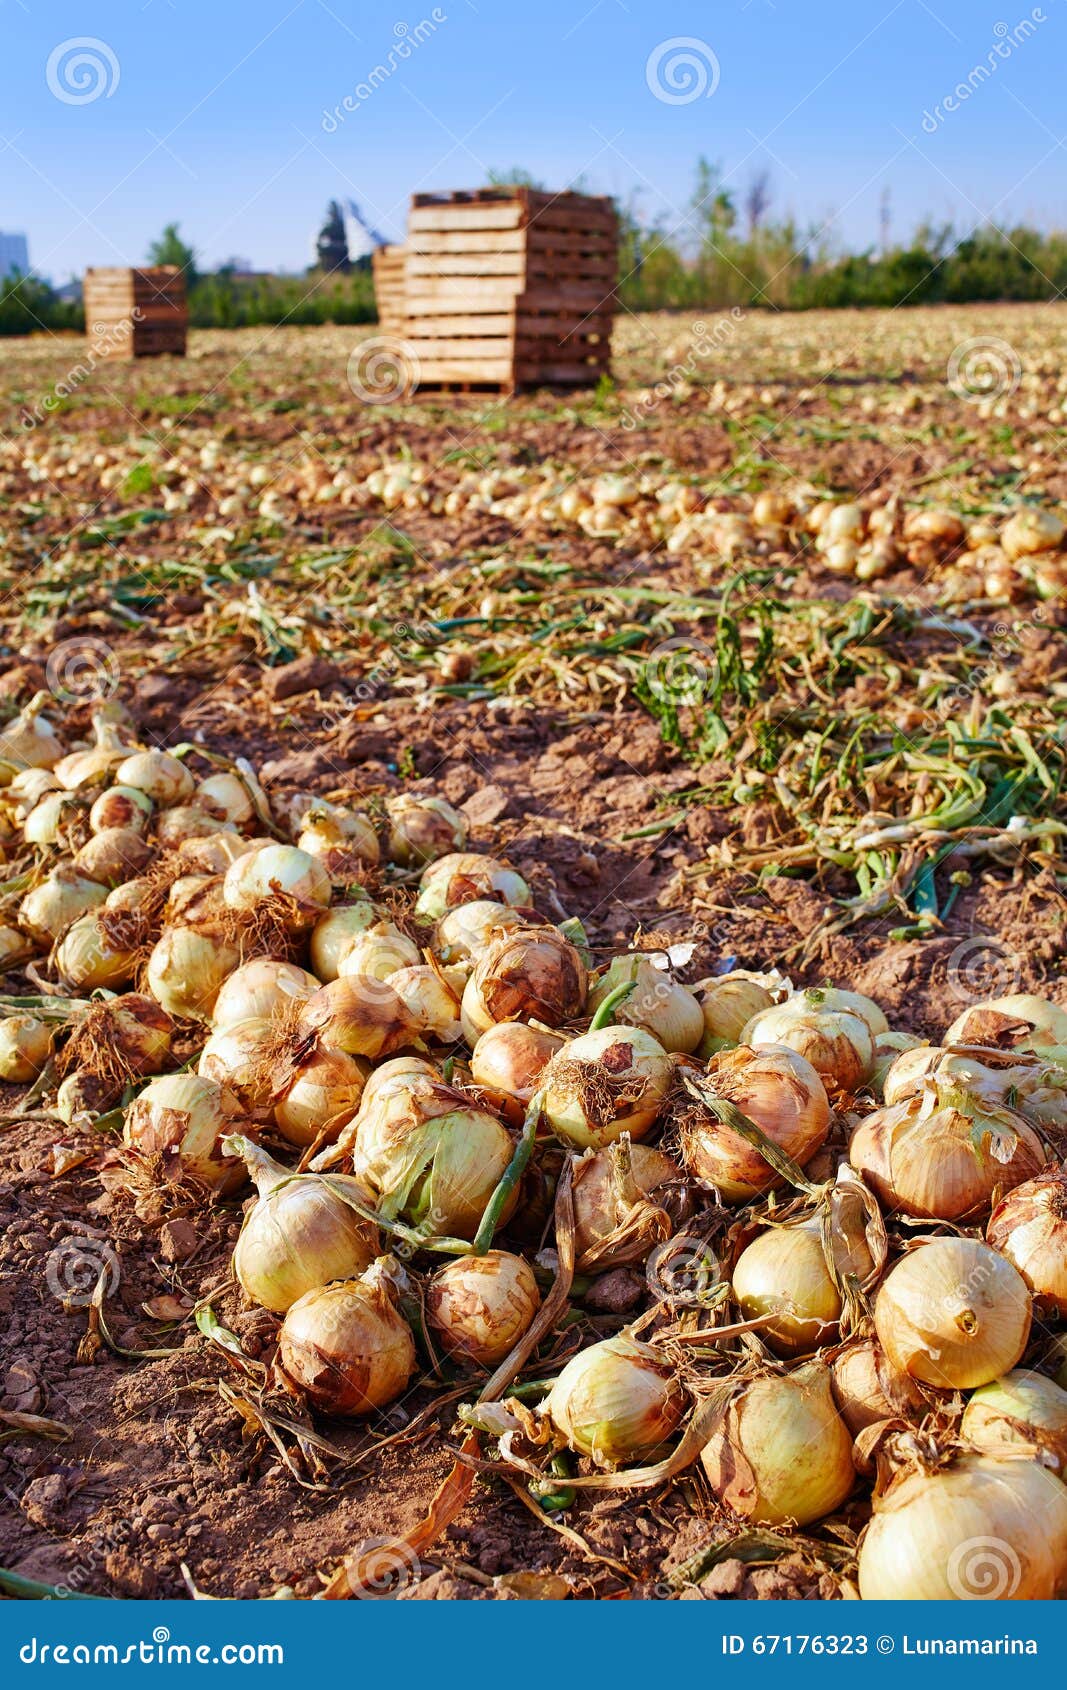 onion harvest in valencia spain huerta